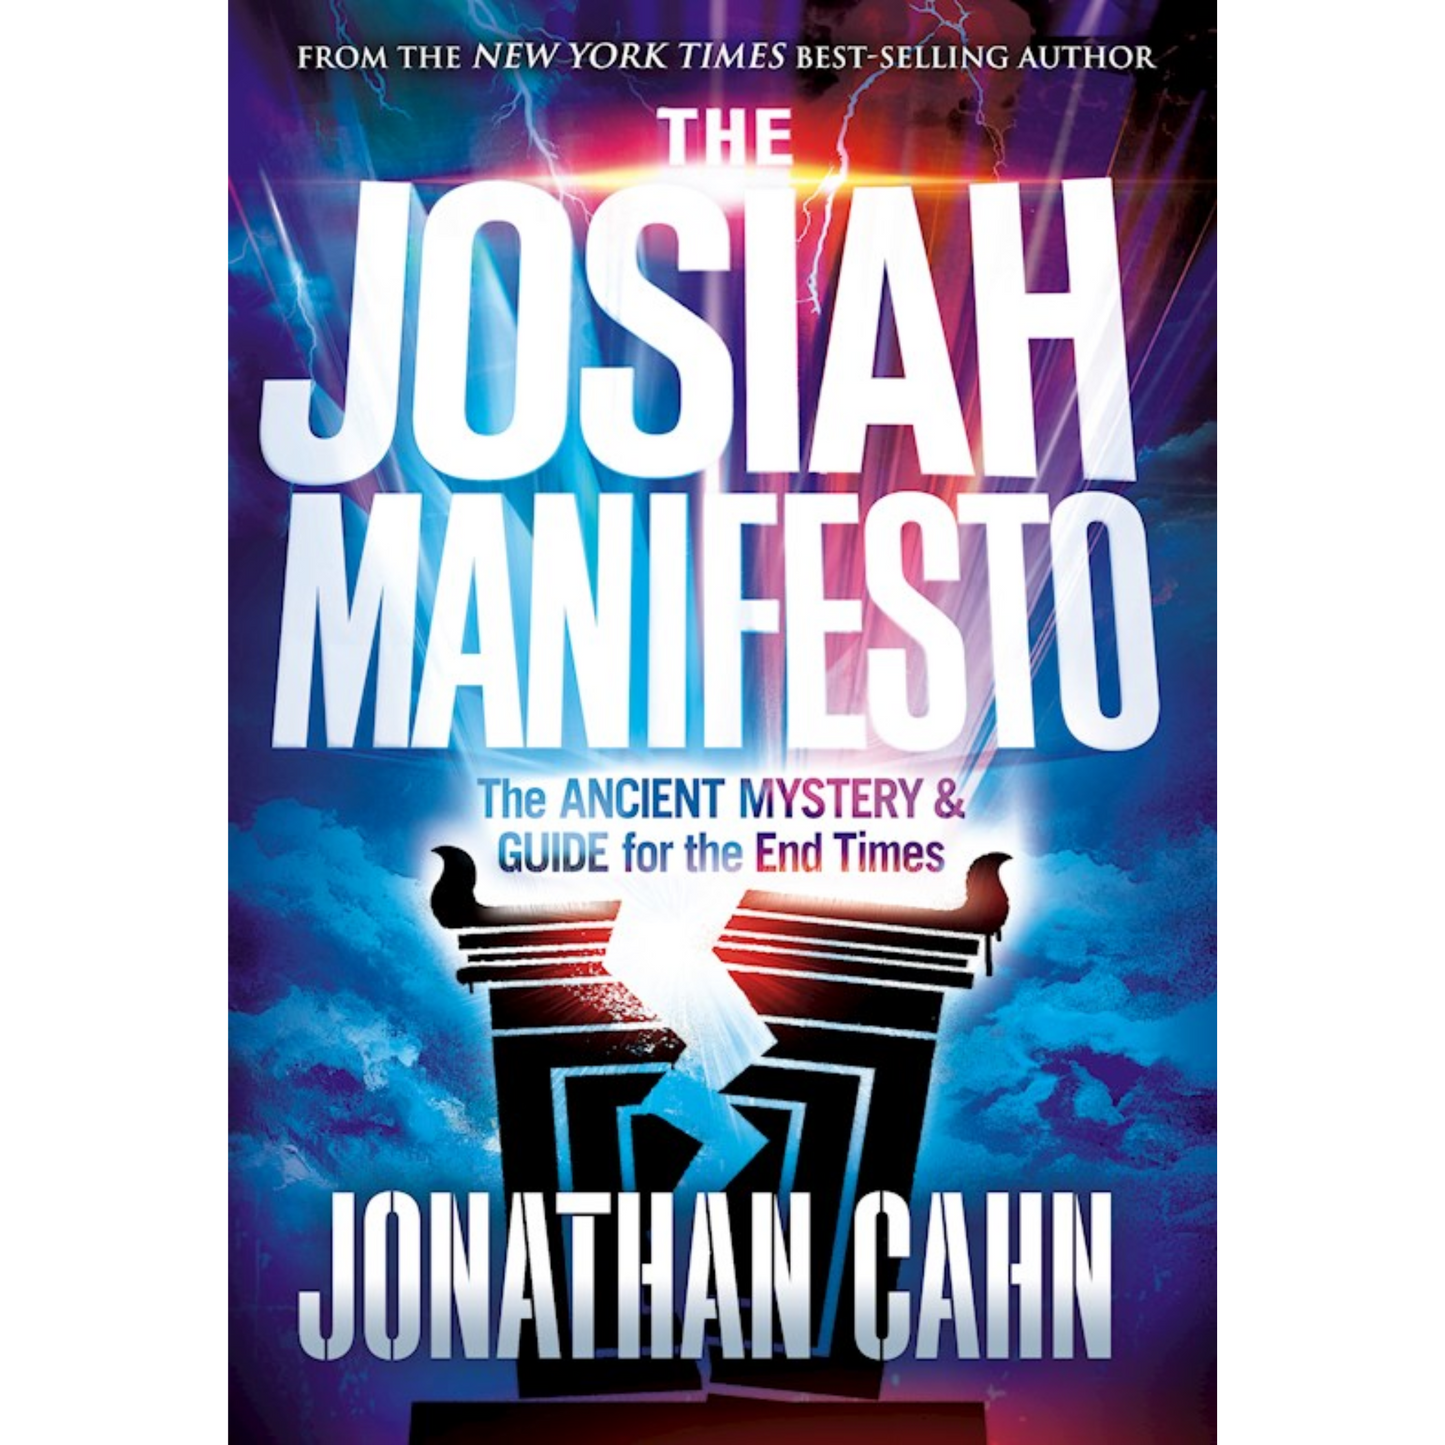 The Josiah Manifesto